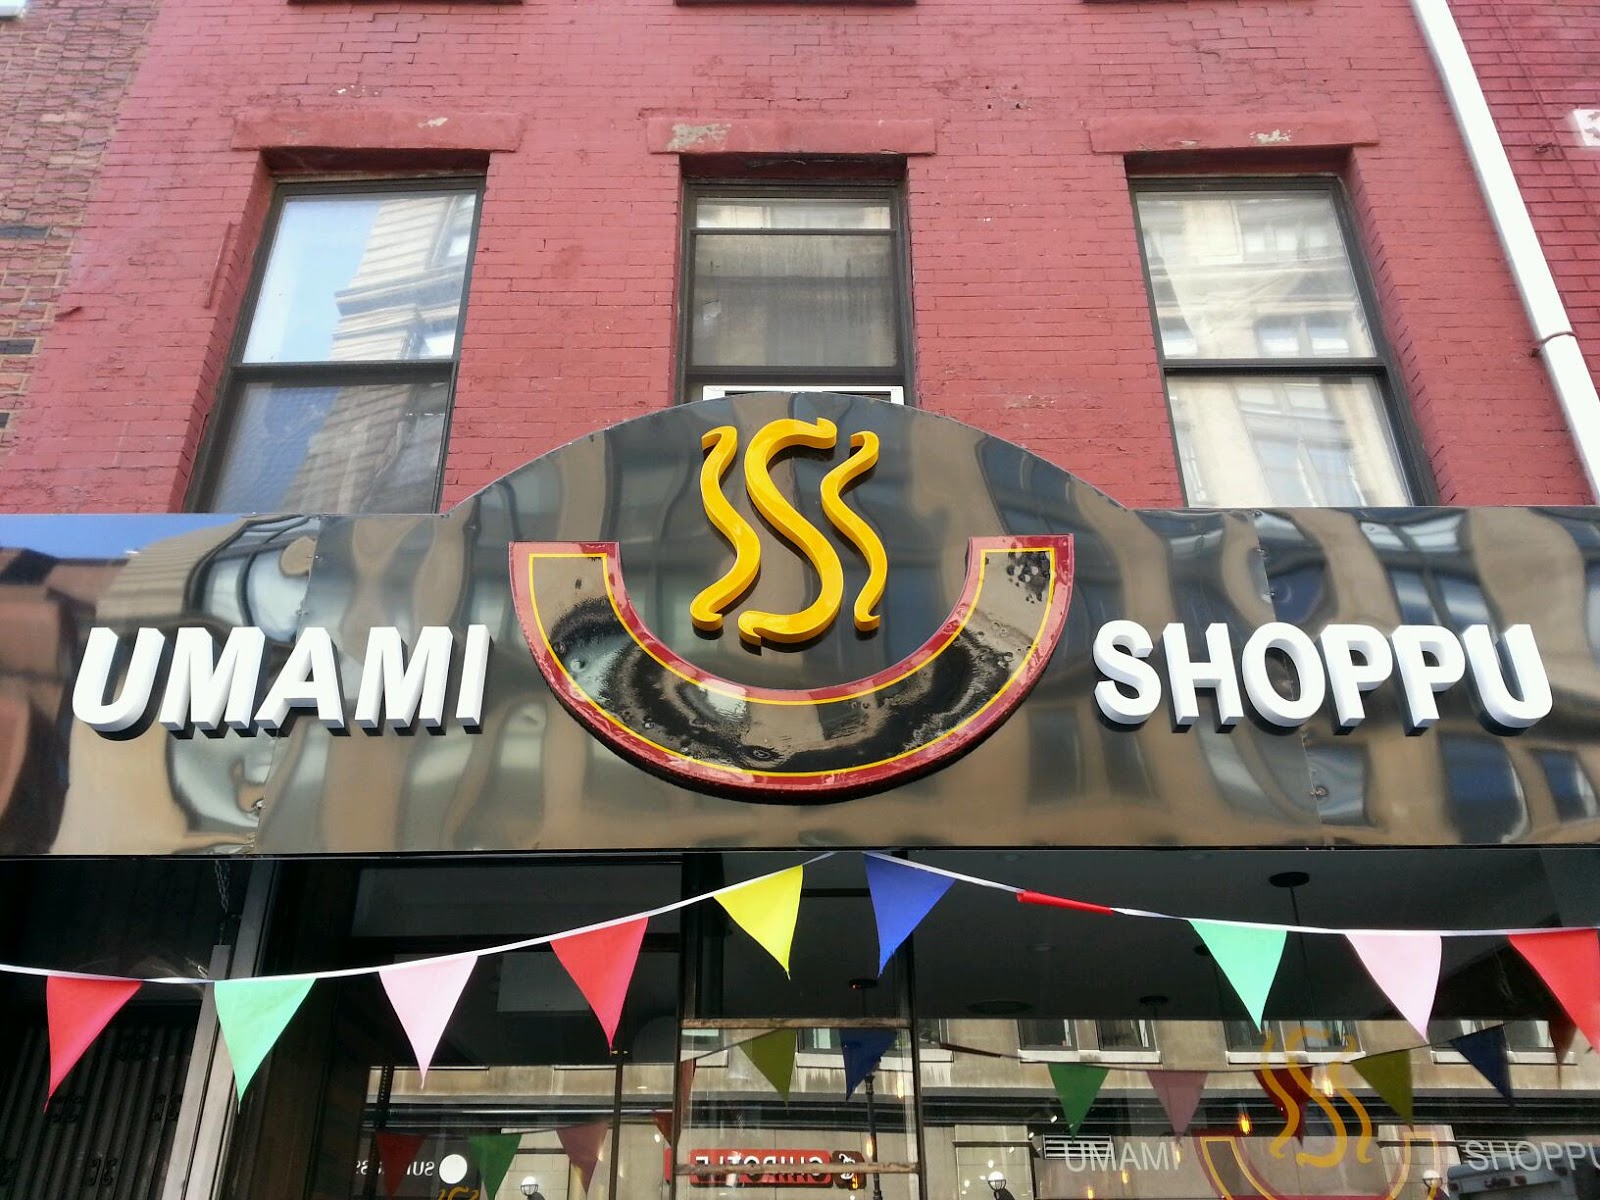 Photo of Umami Shoppu in New York City, New York, United States - 4 Picture of Restaurant, Food, Point of interest, Establishment